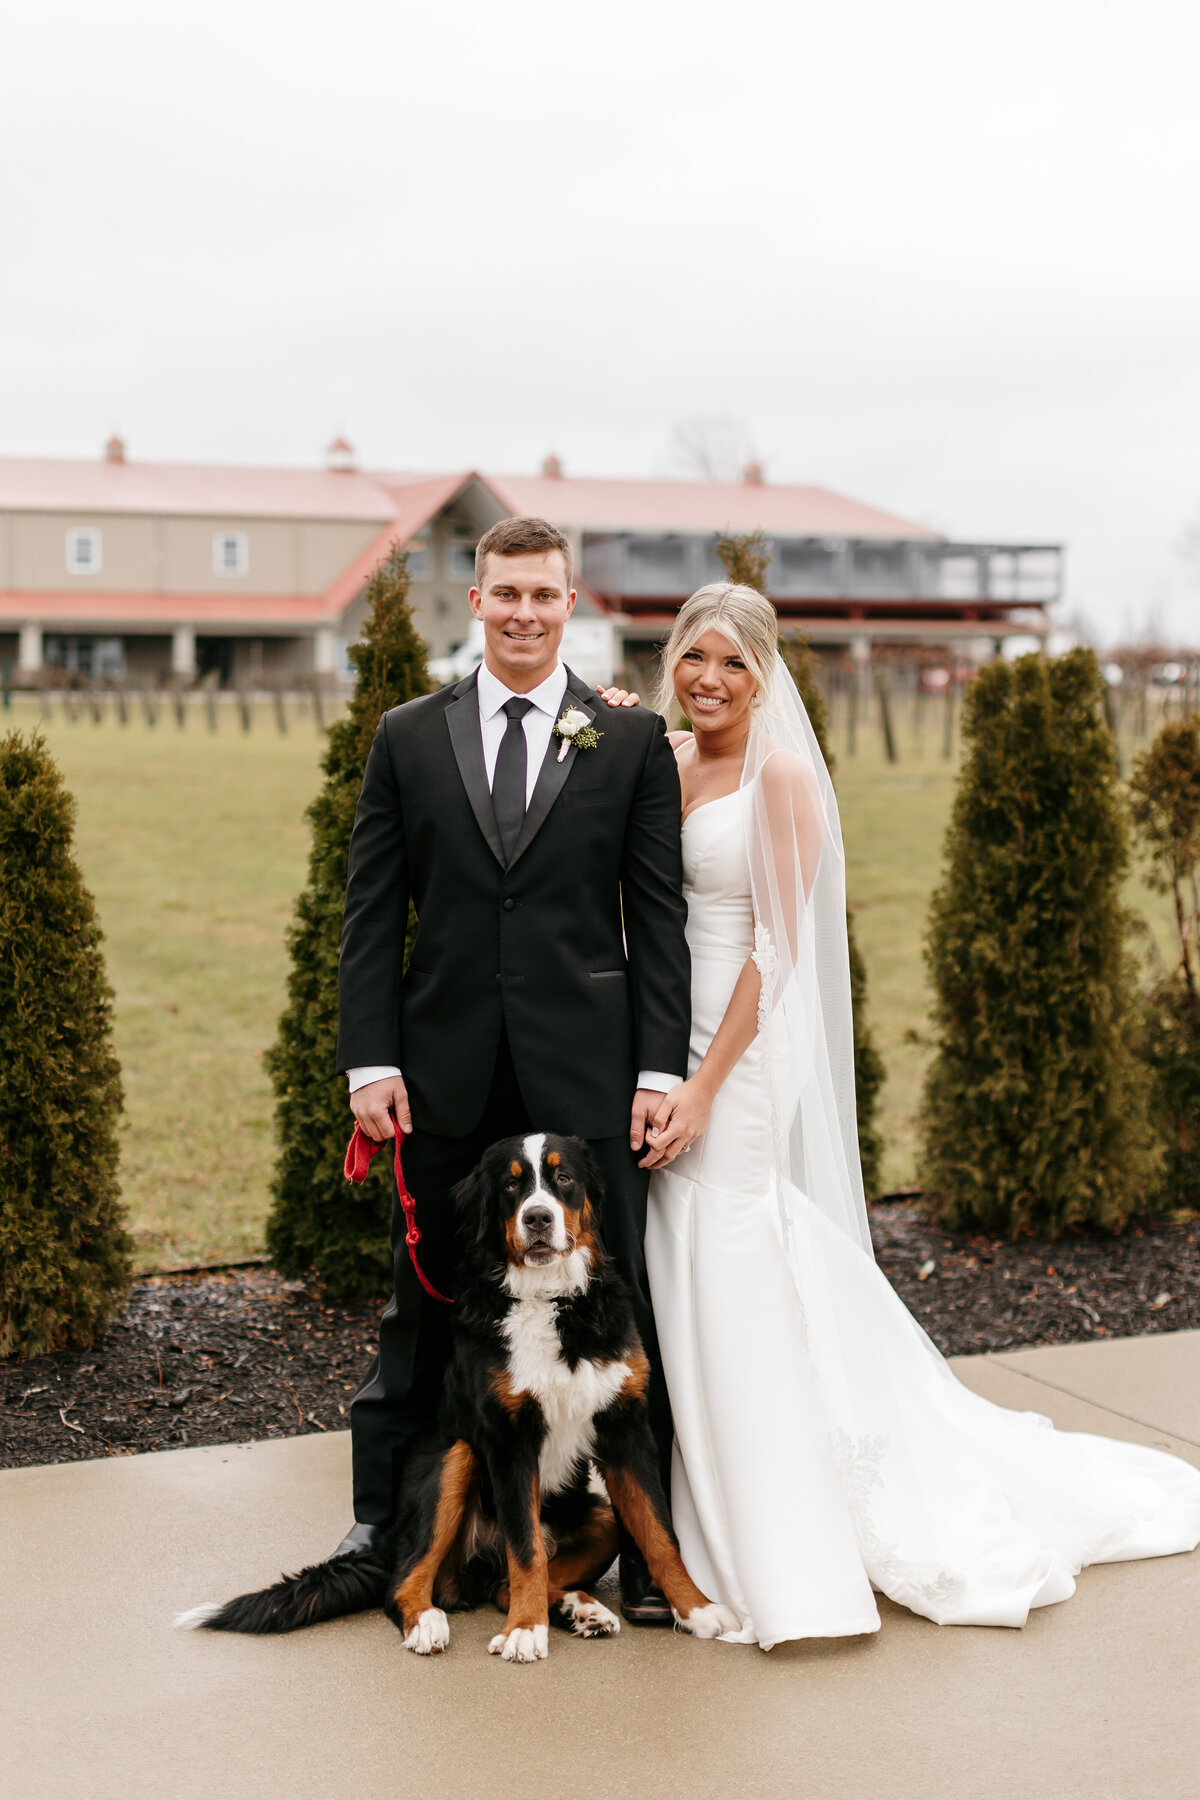 Dog friendly wedding, Couple with their dog